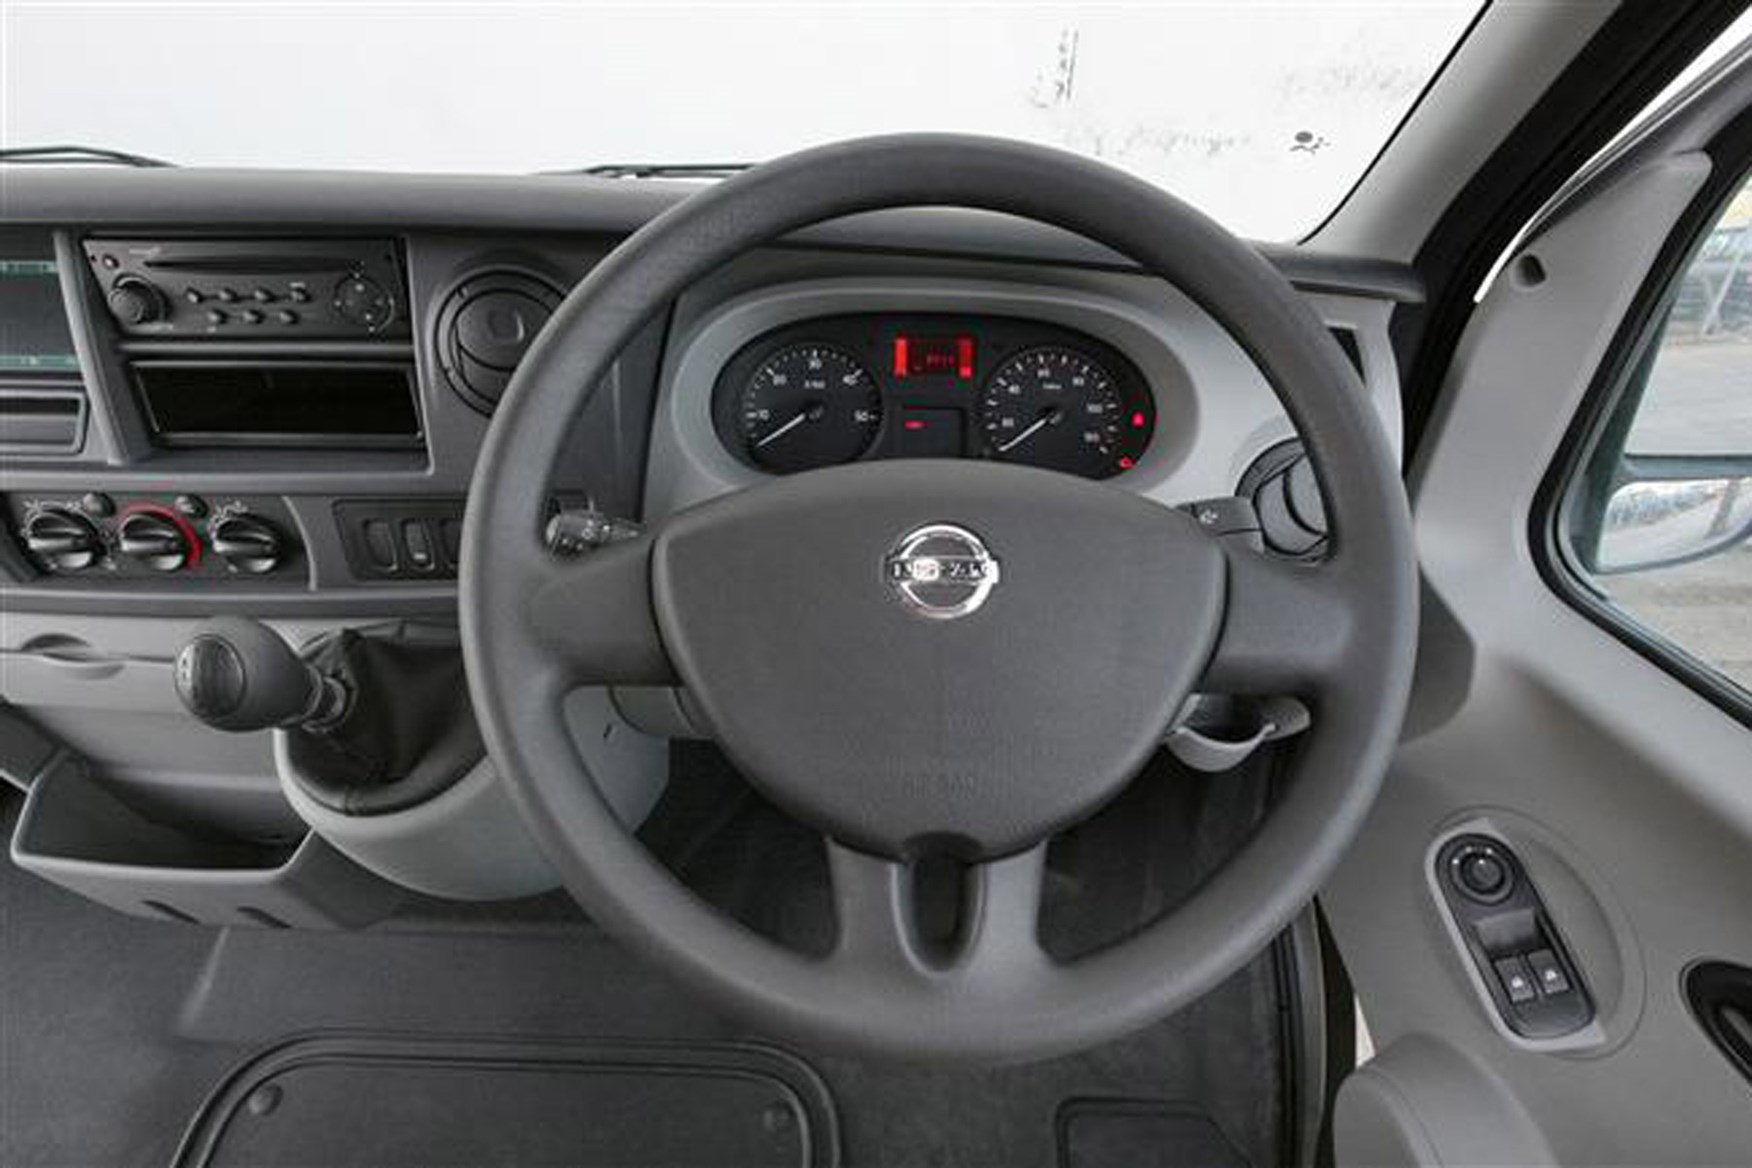 Nissan Interstar 2003-2011 review on Parkers Vans - cabin detail